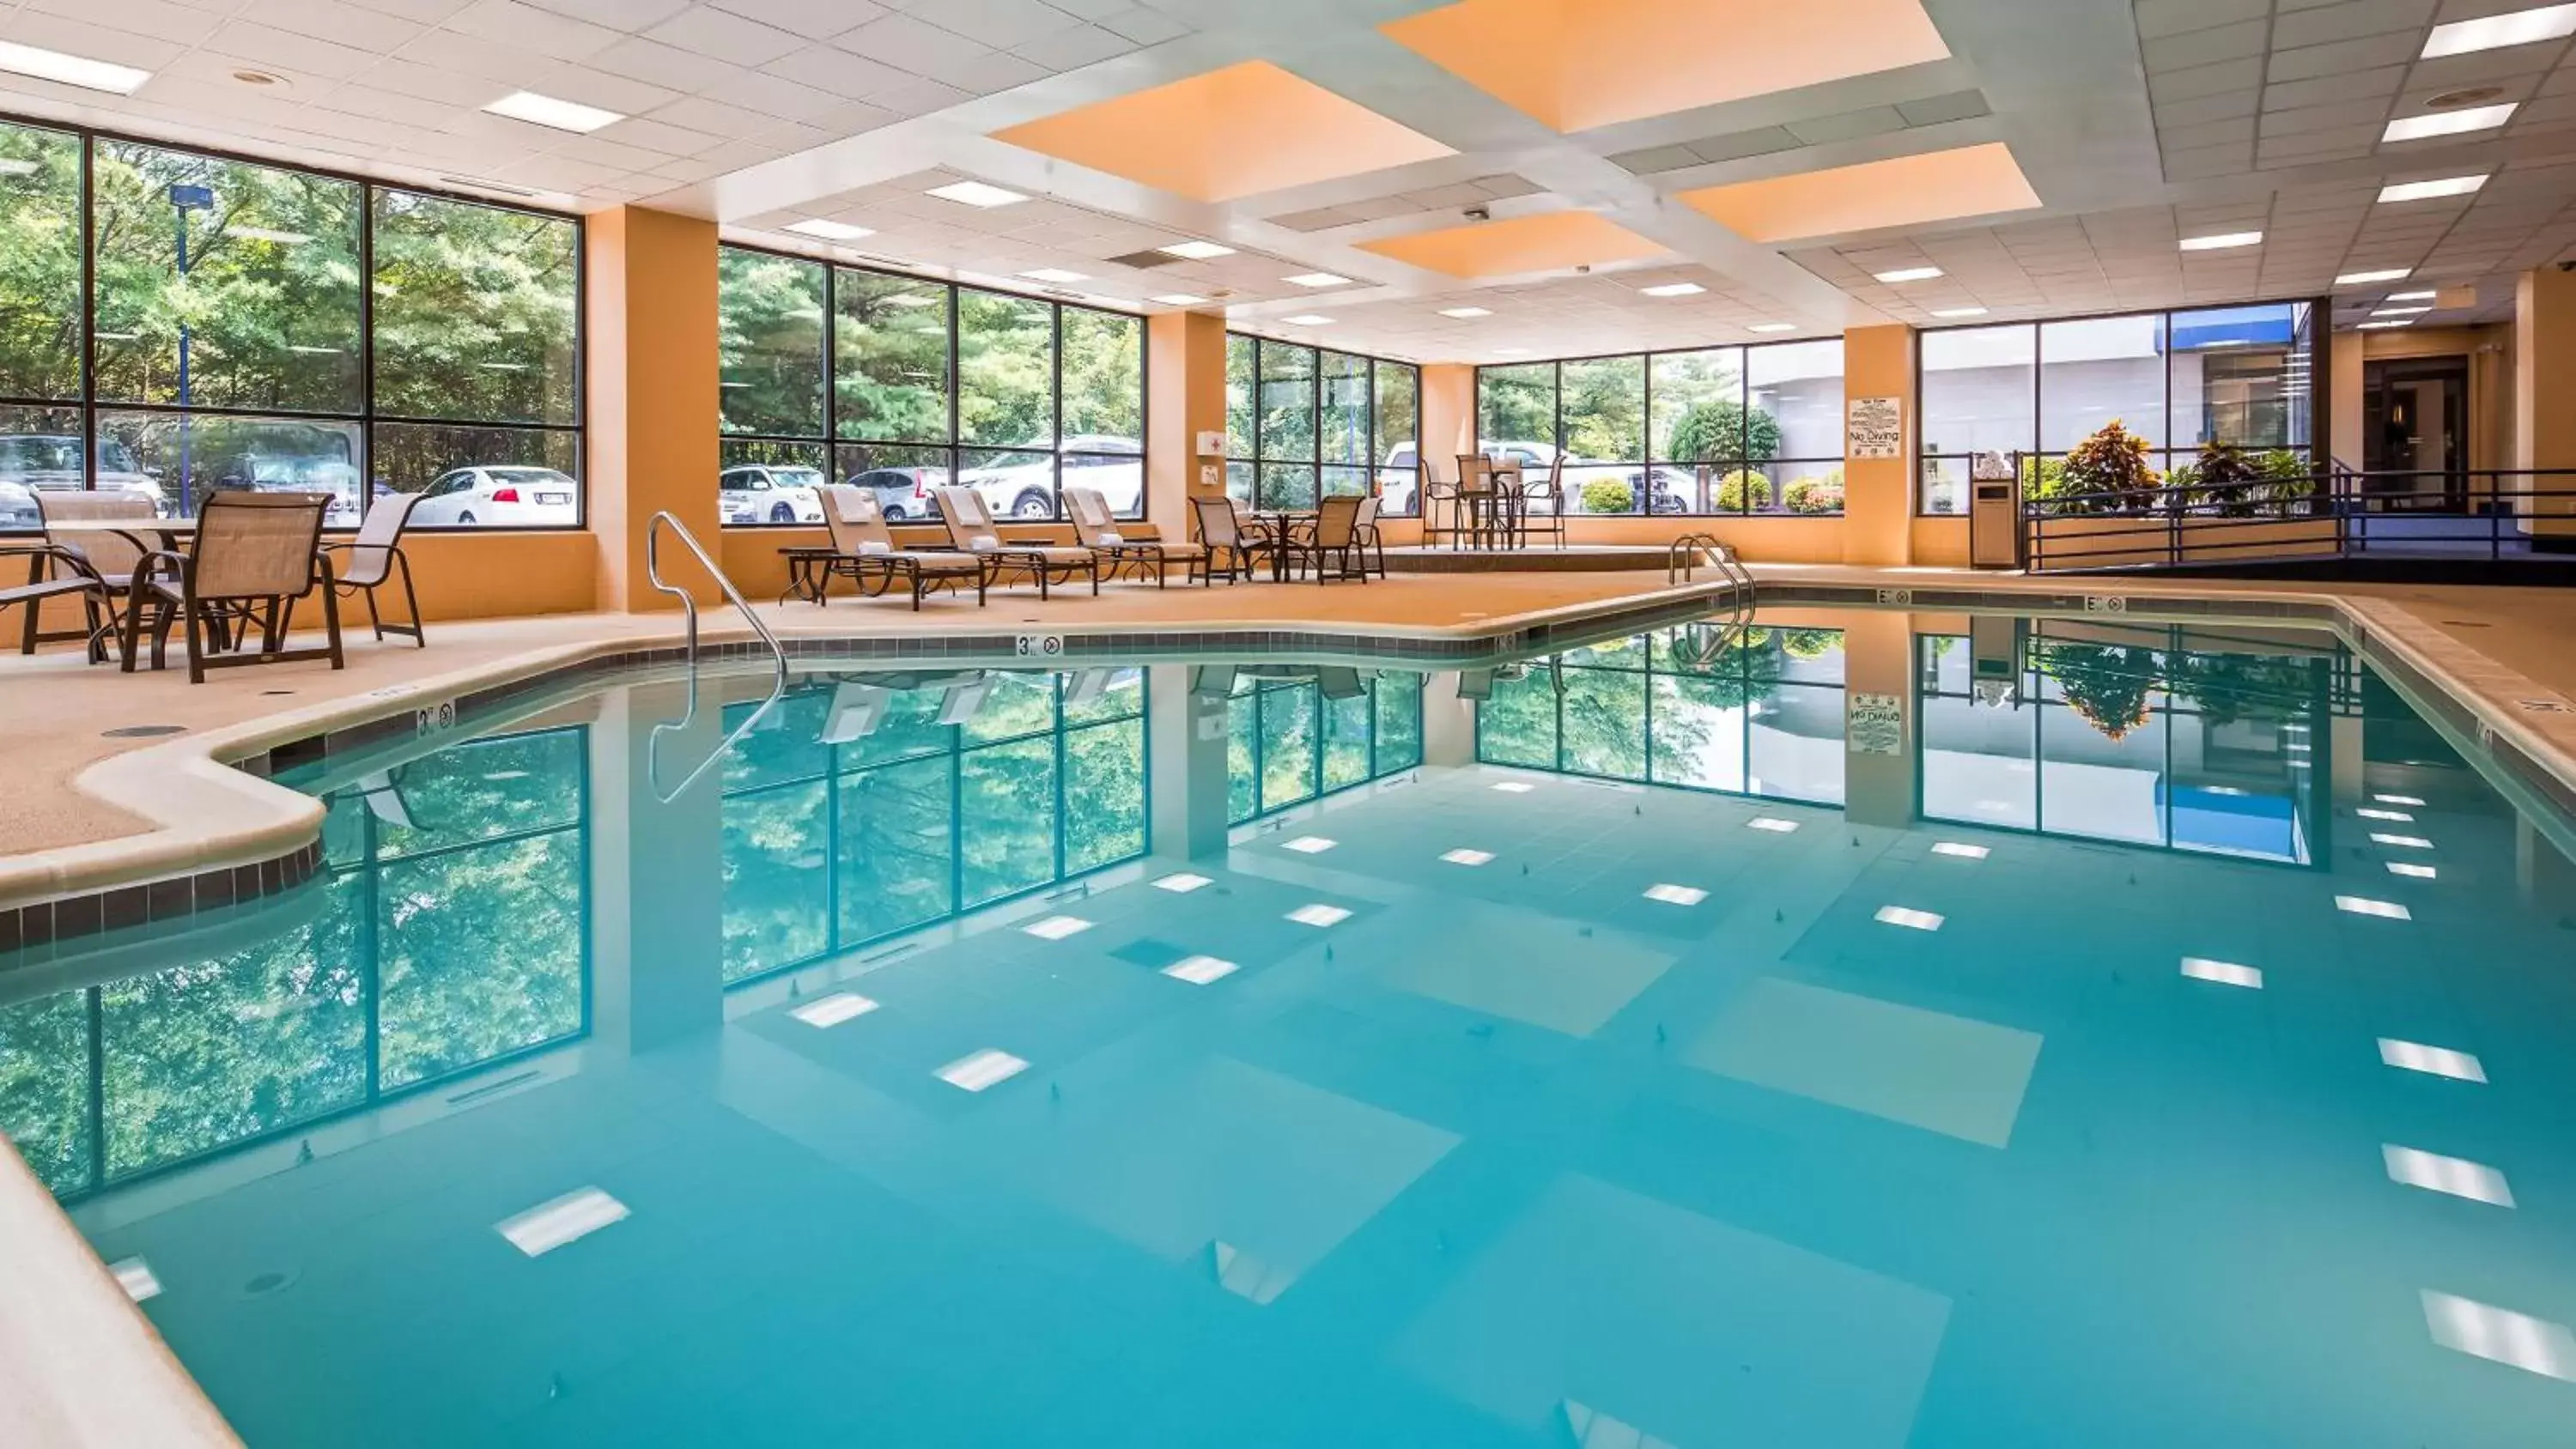 On site, Swimming Pool in Best Western Plus BWI Airport Hotel - Arundel Mills